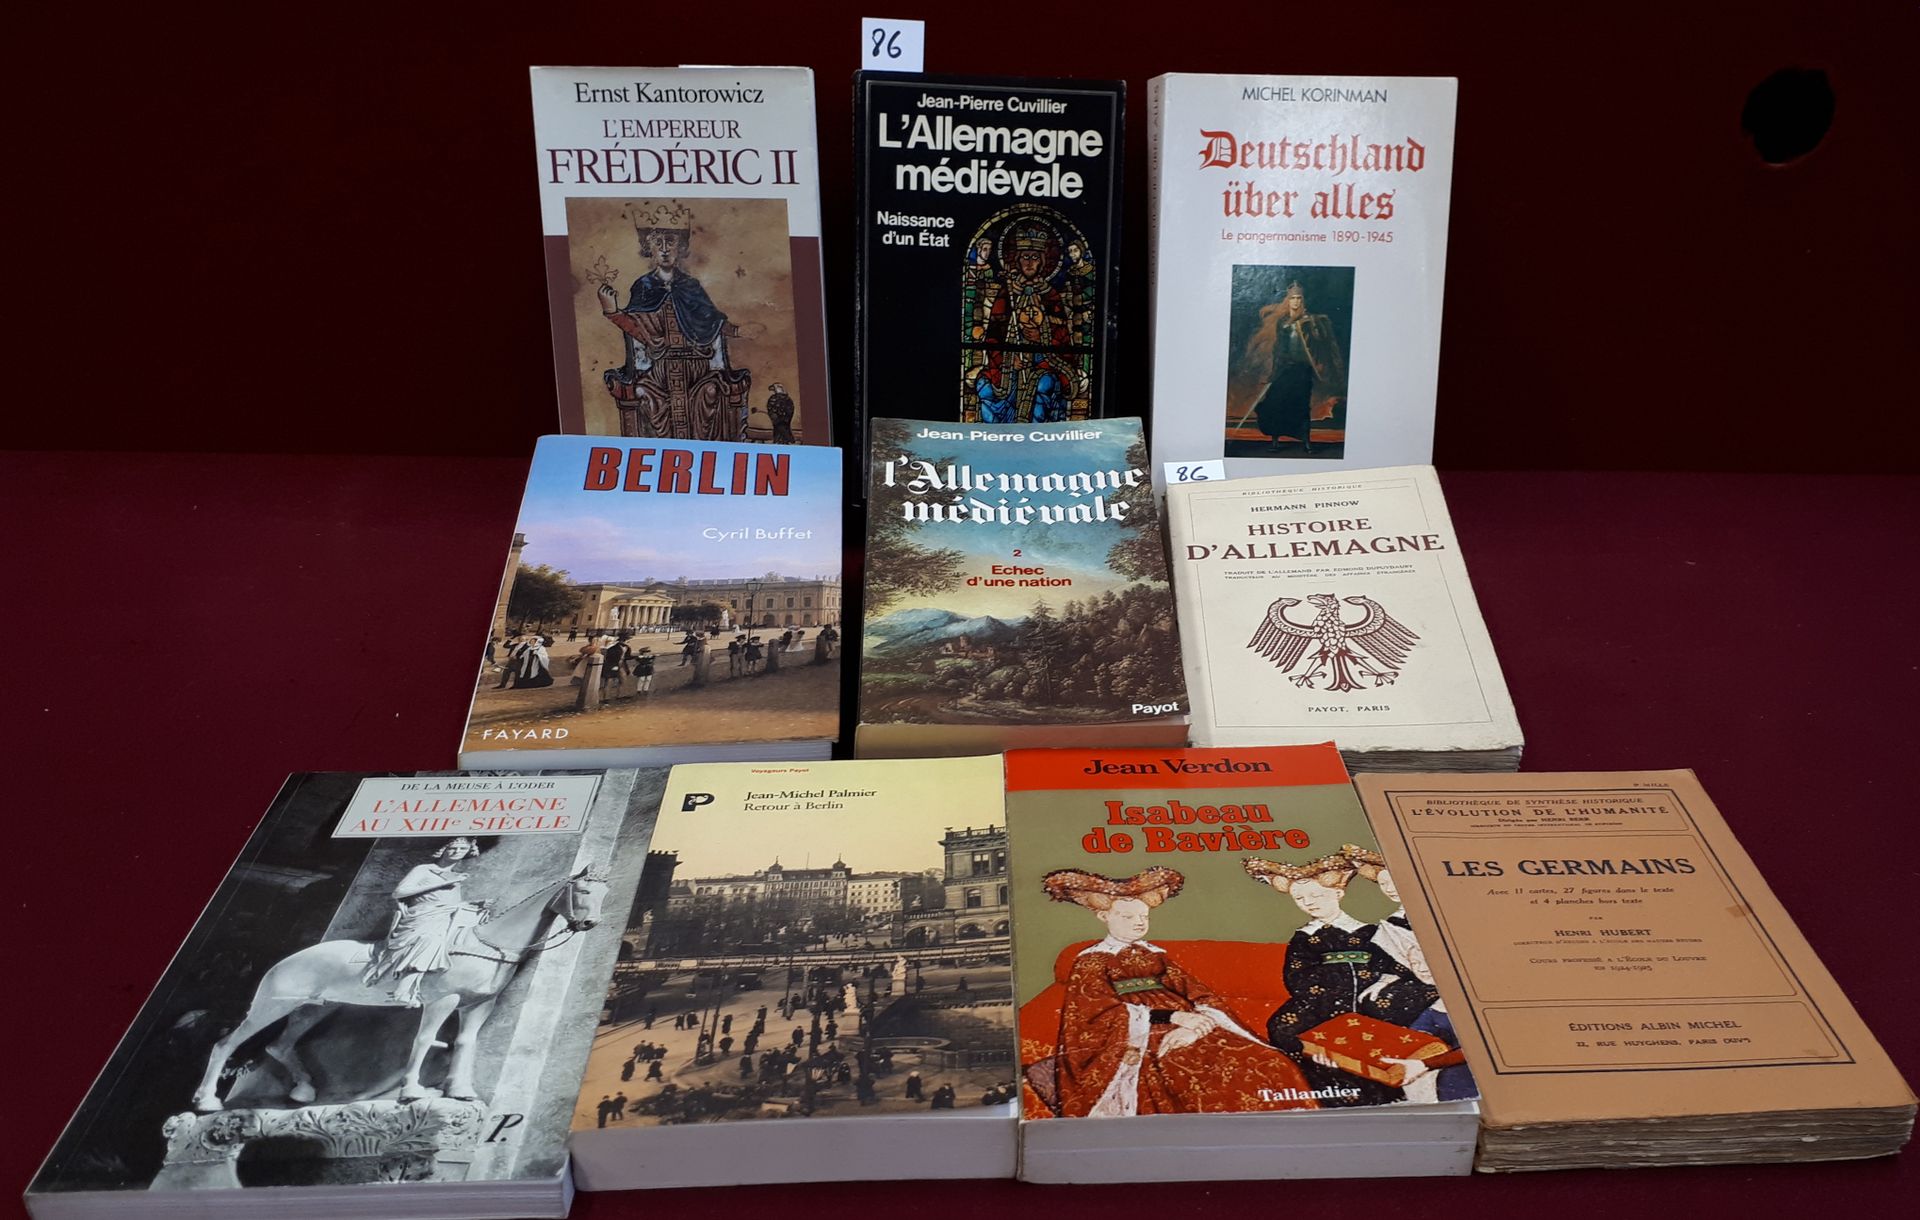 Allemagne set di 10 libri sulla Germania tra cui: Germania medievale